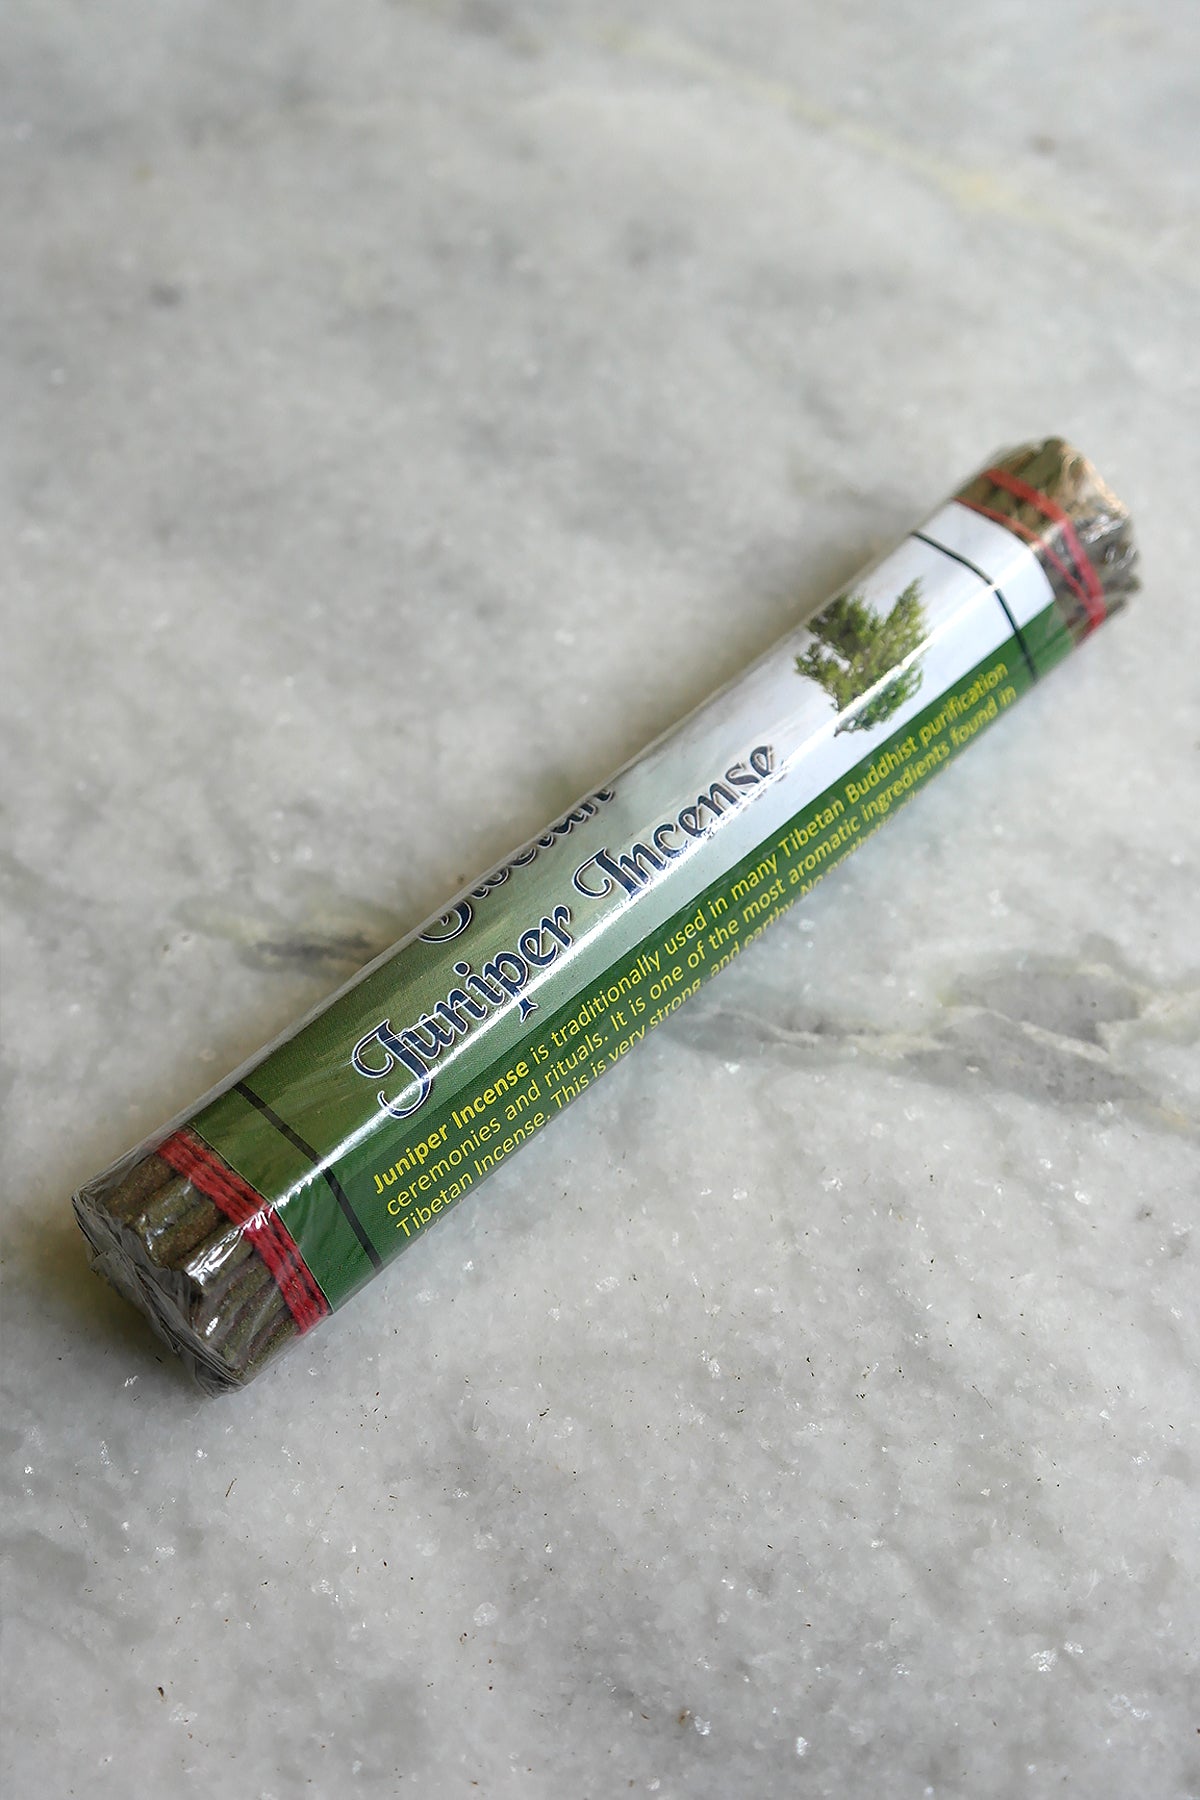 Juniper Incense Sticks, Tibetan Natural Juniper Incense pack